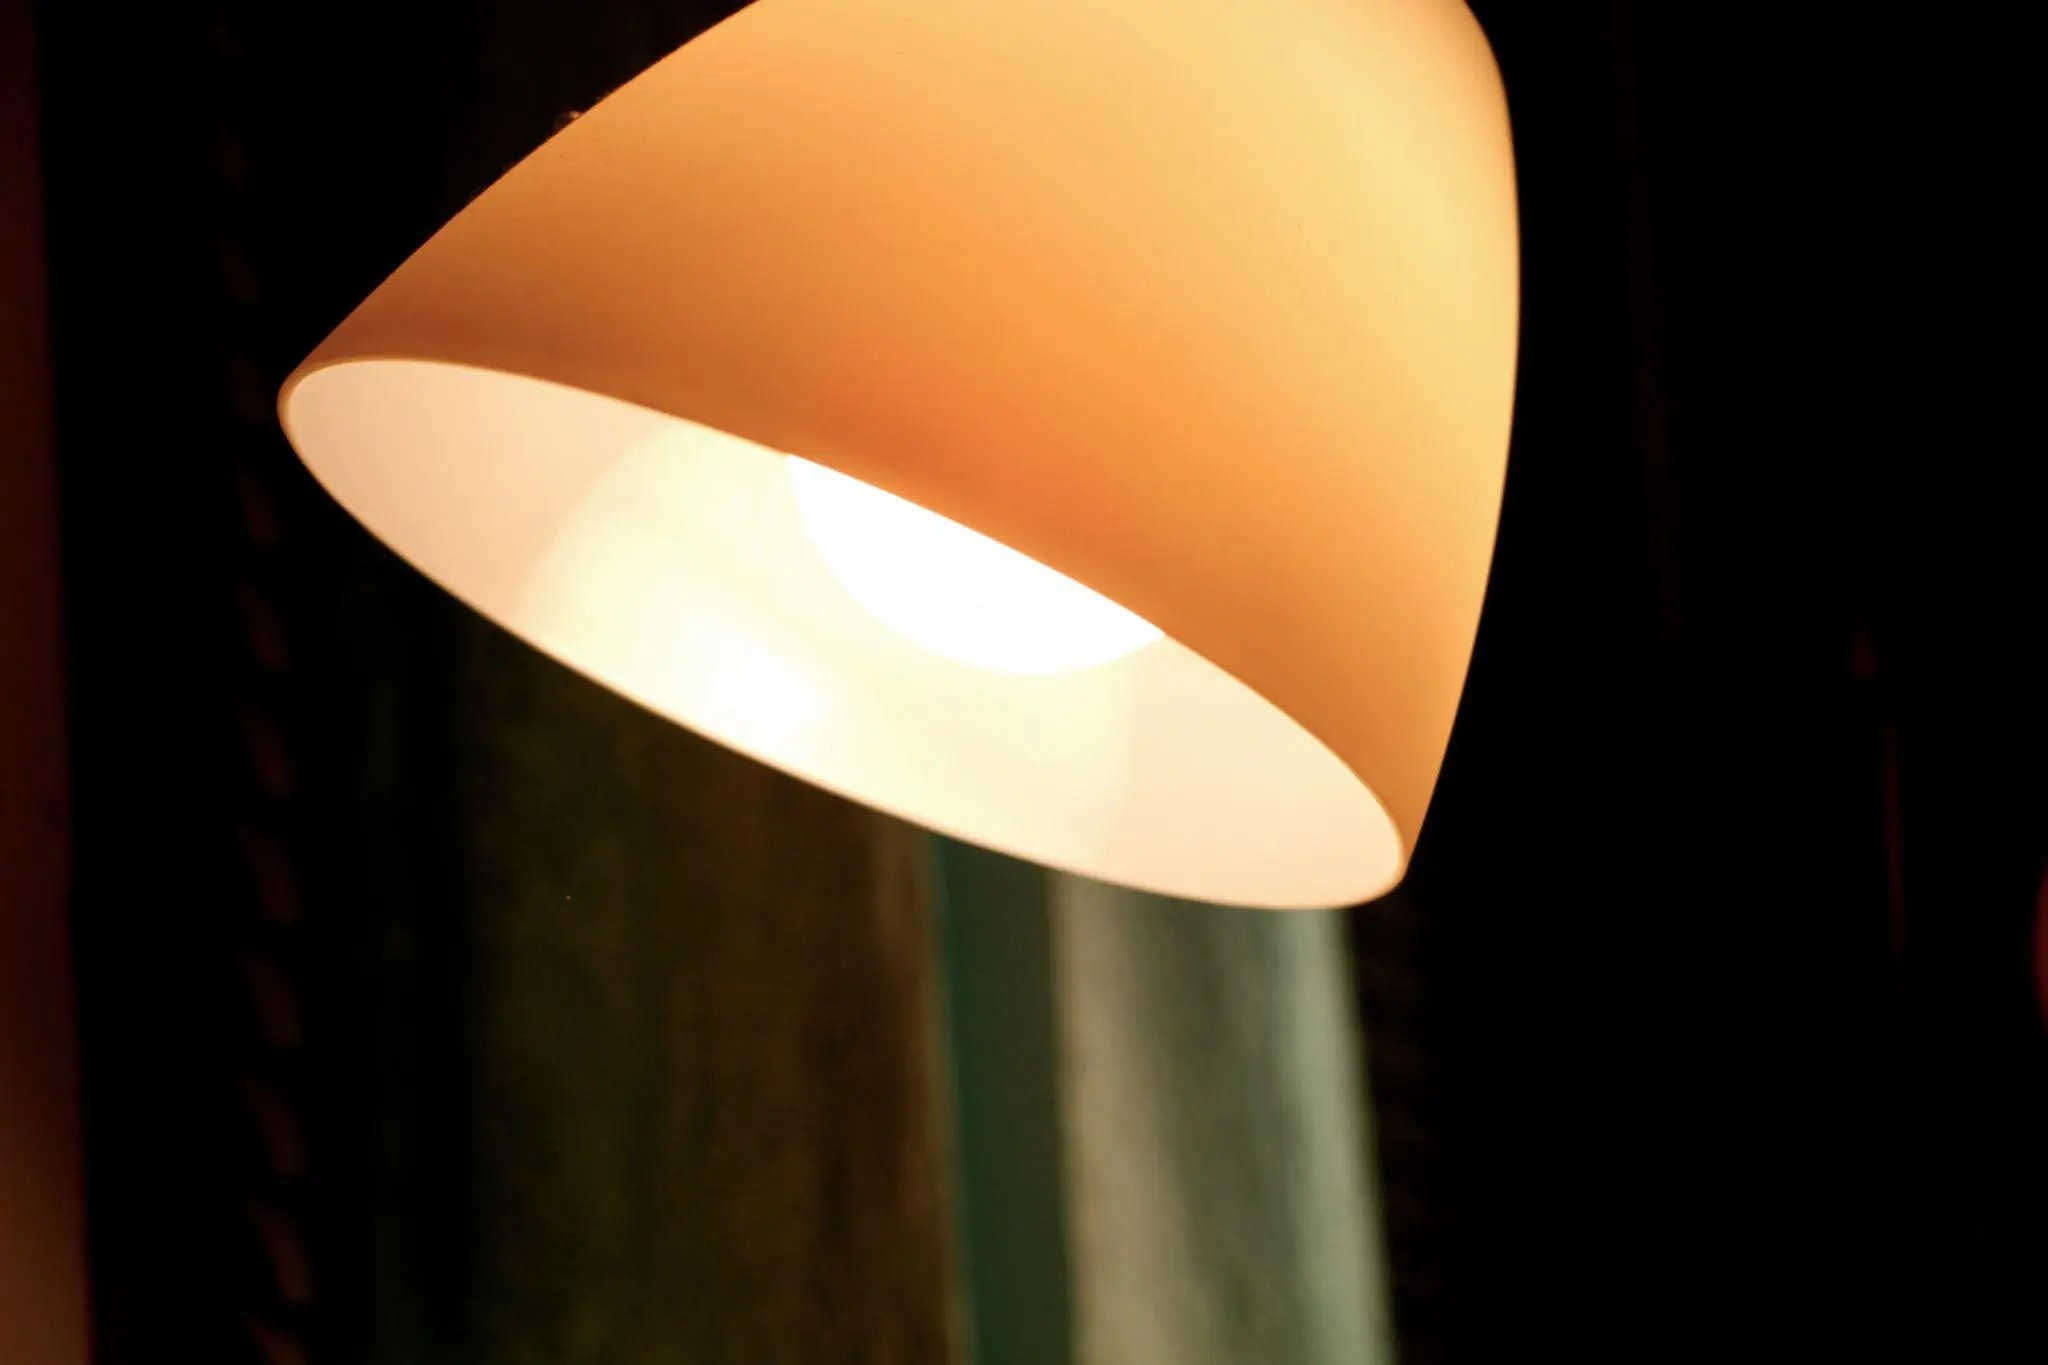 Warm illuminated lamp